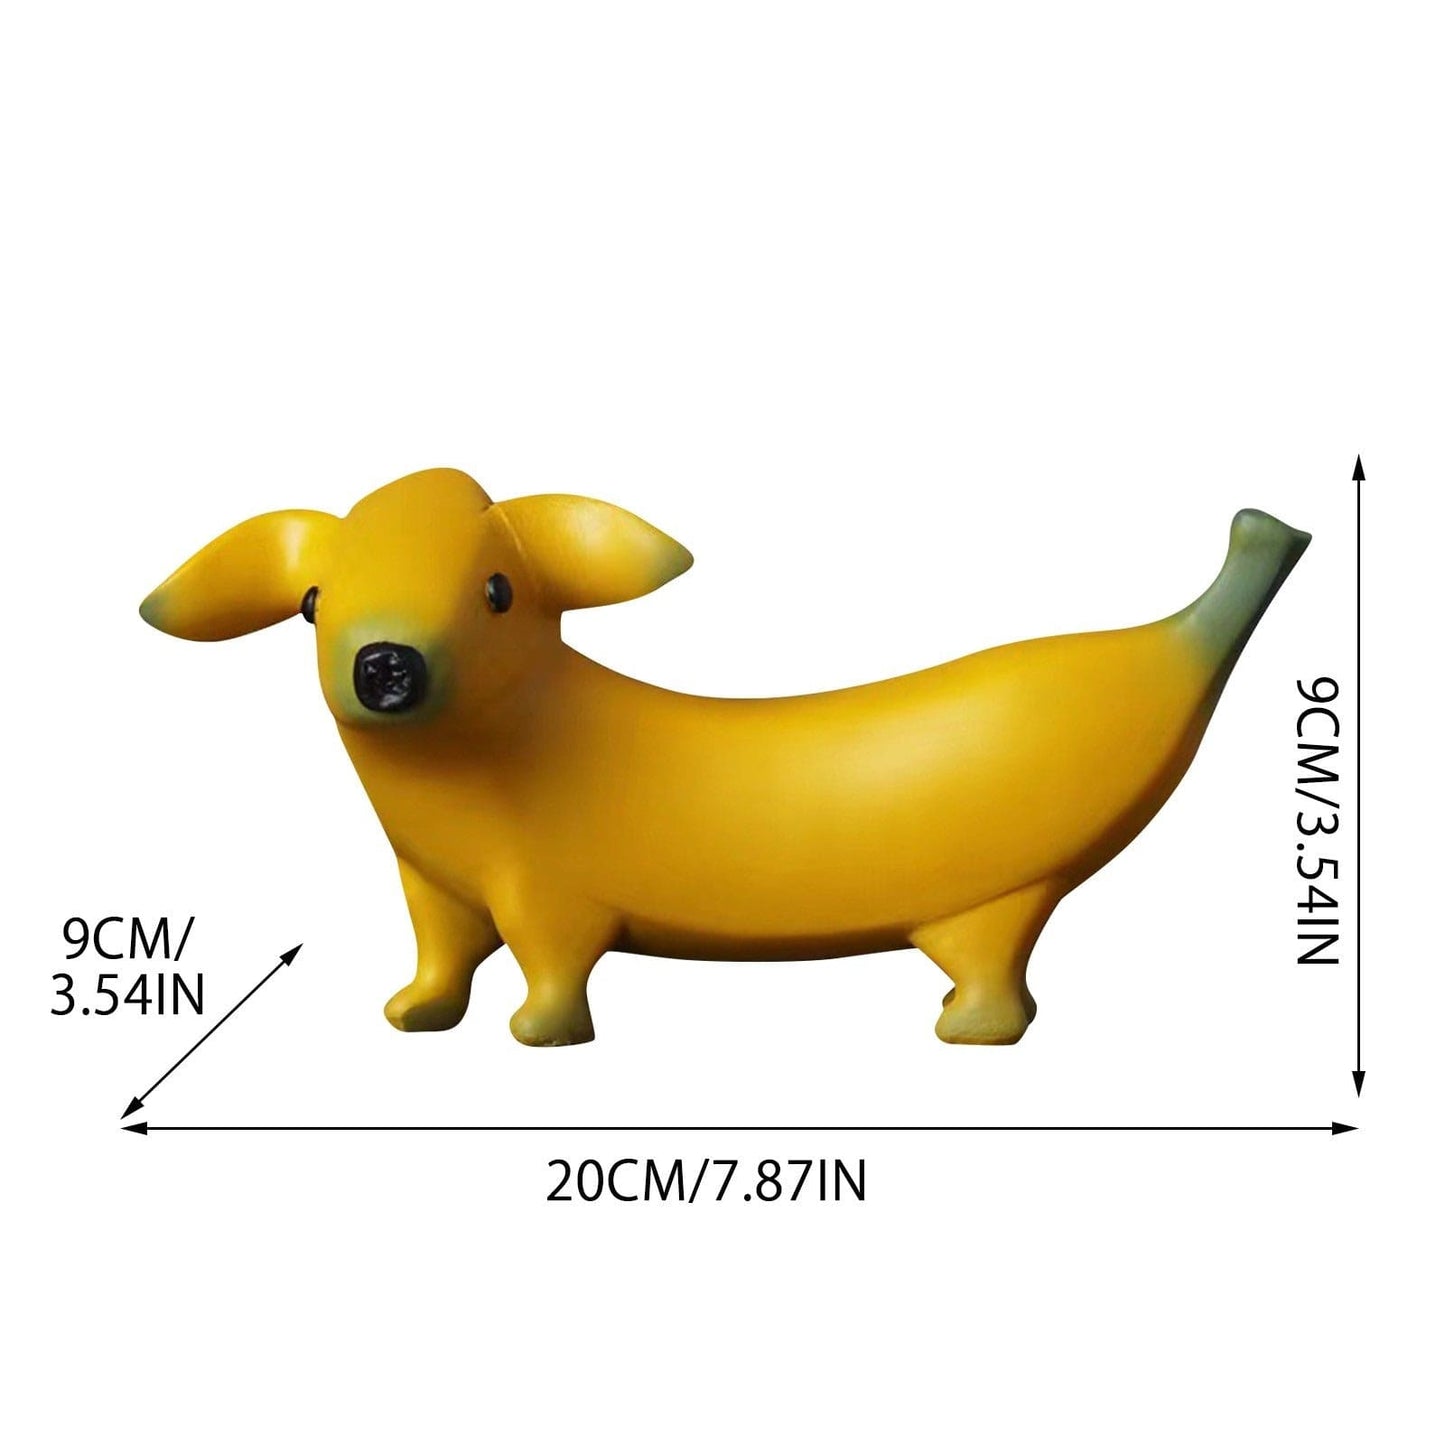 Banana Dachshund Figurines L - 20x9cm/7.8"x3.54" The Doxie World